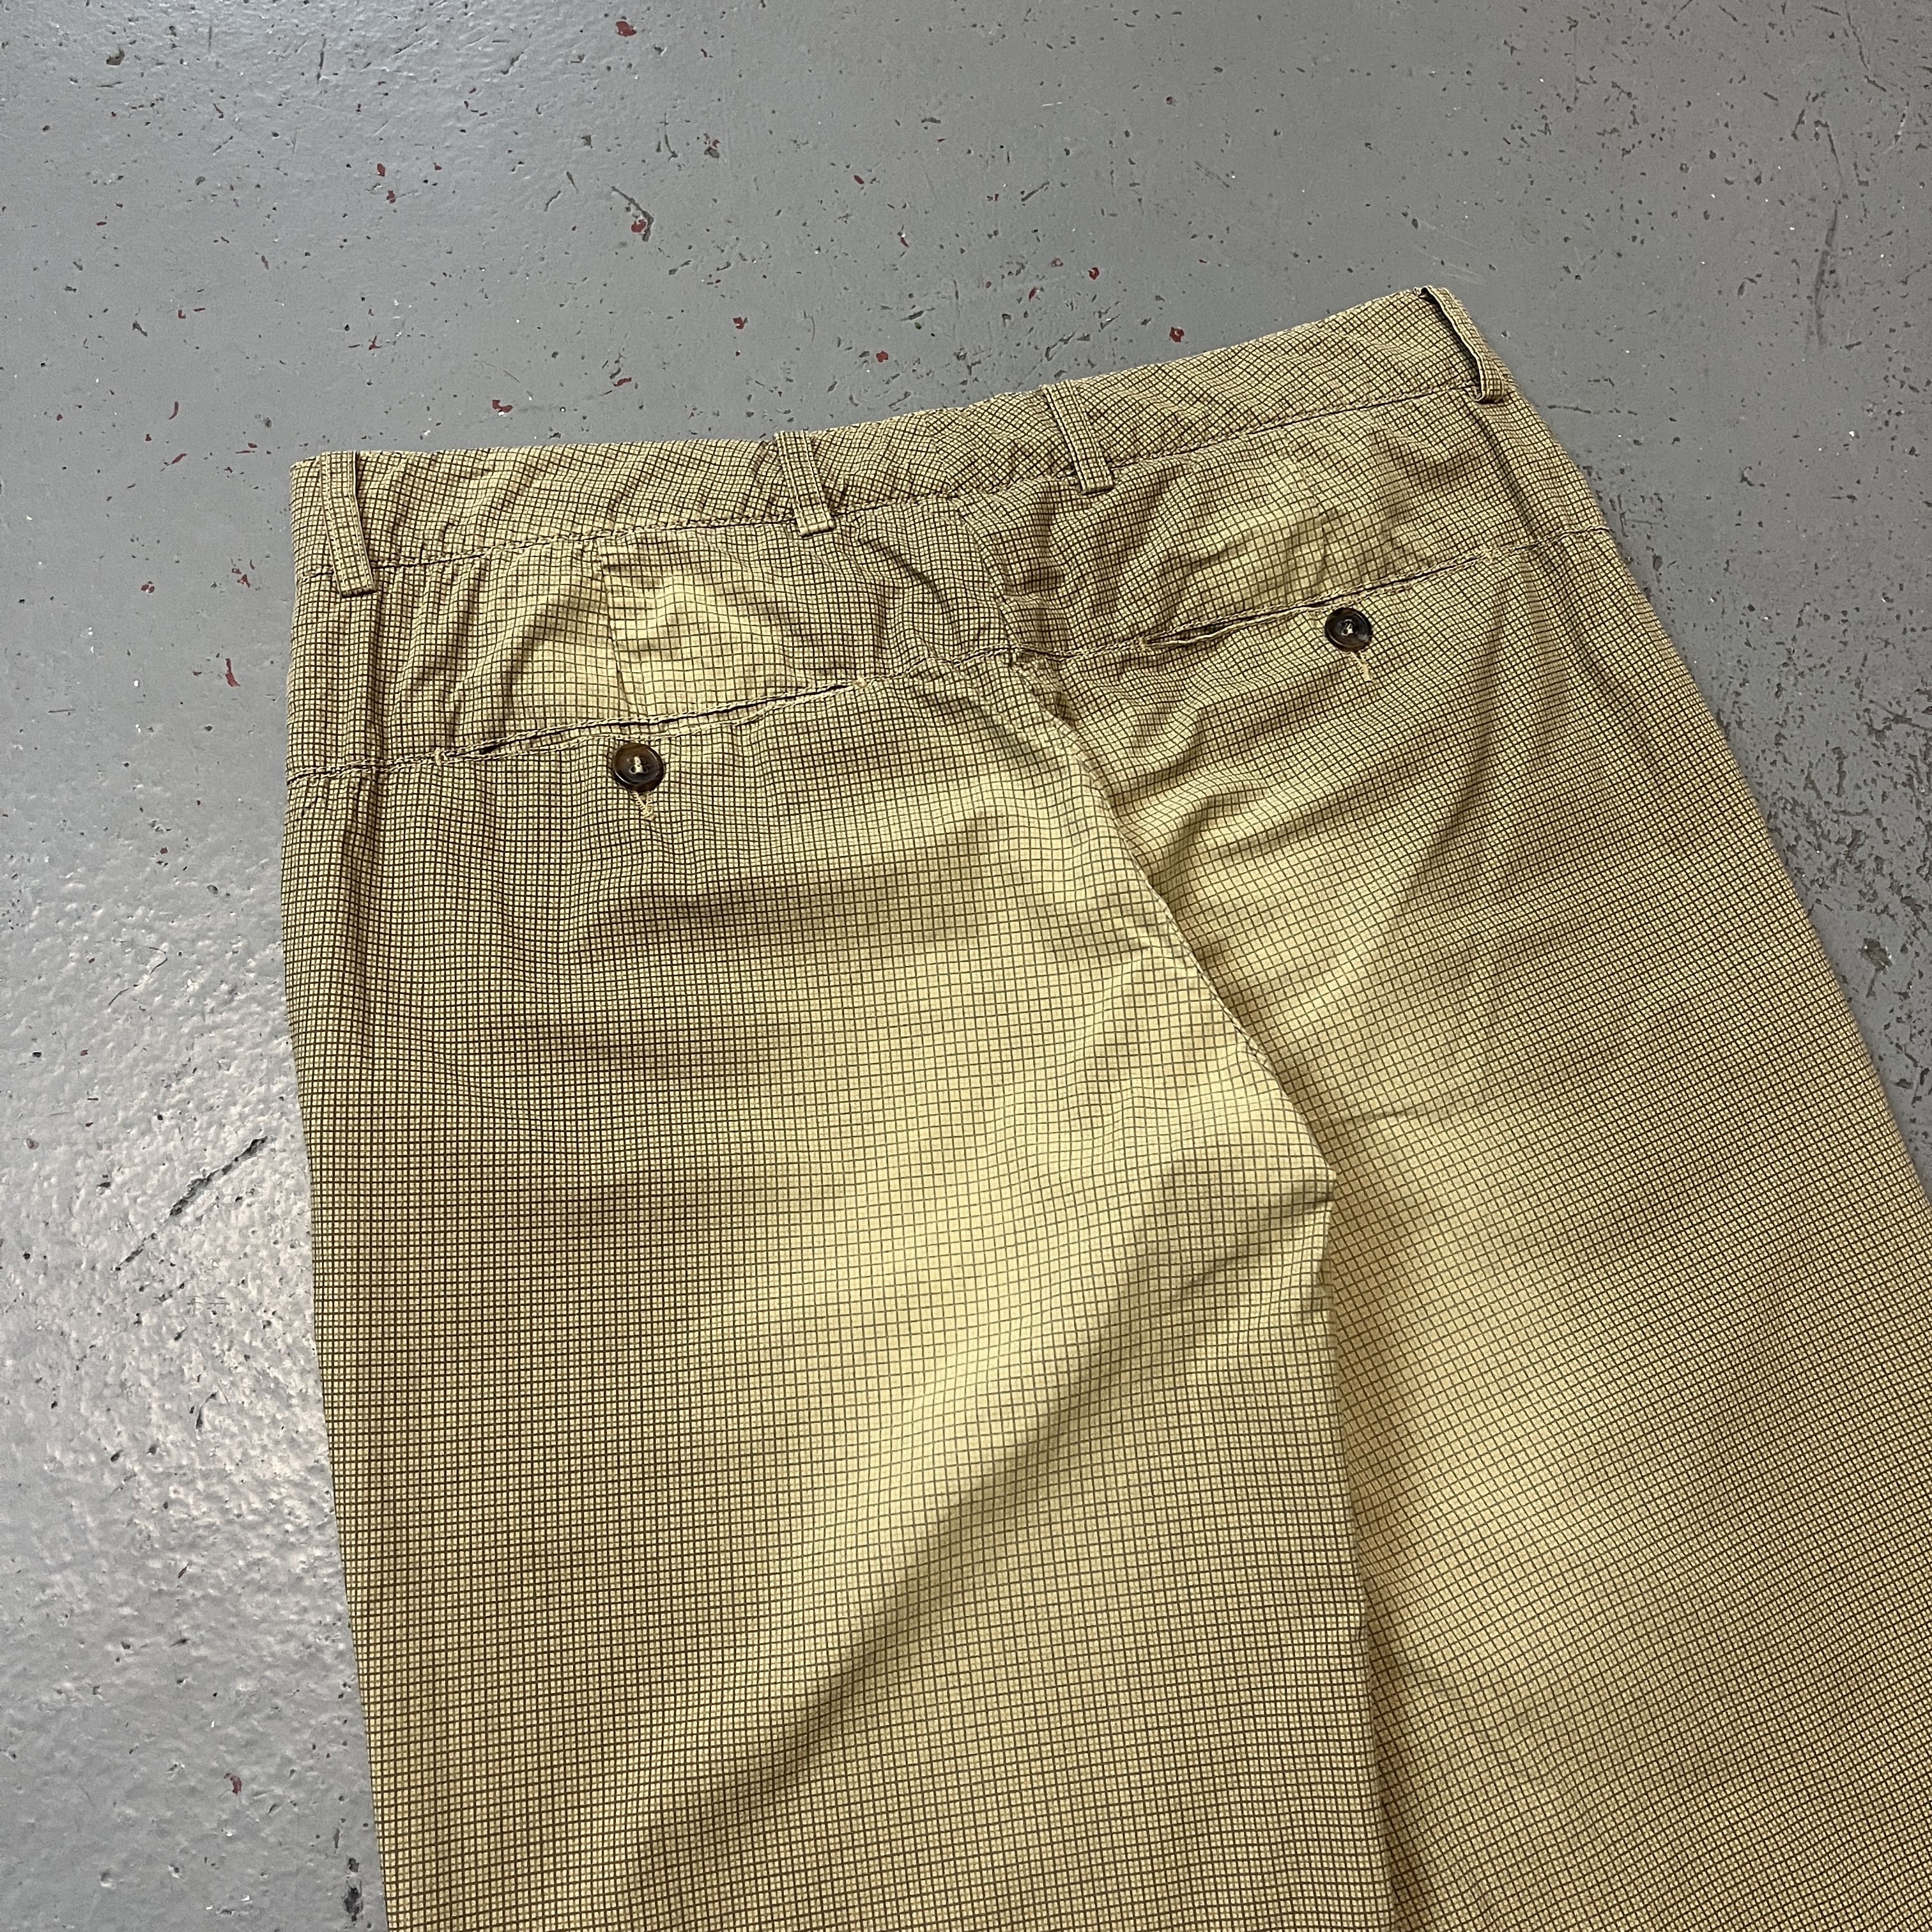 Martin Margiela, S/S 2006 'Sun Faded' Checked Anatomical Trouser 